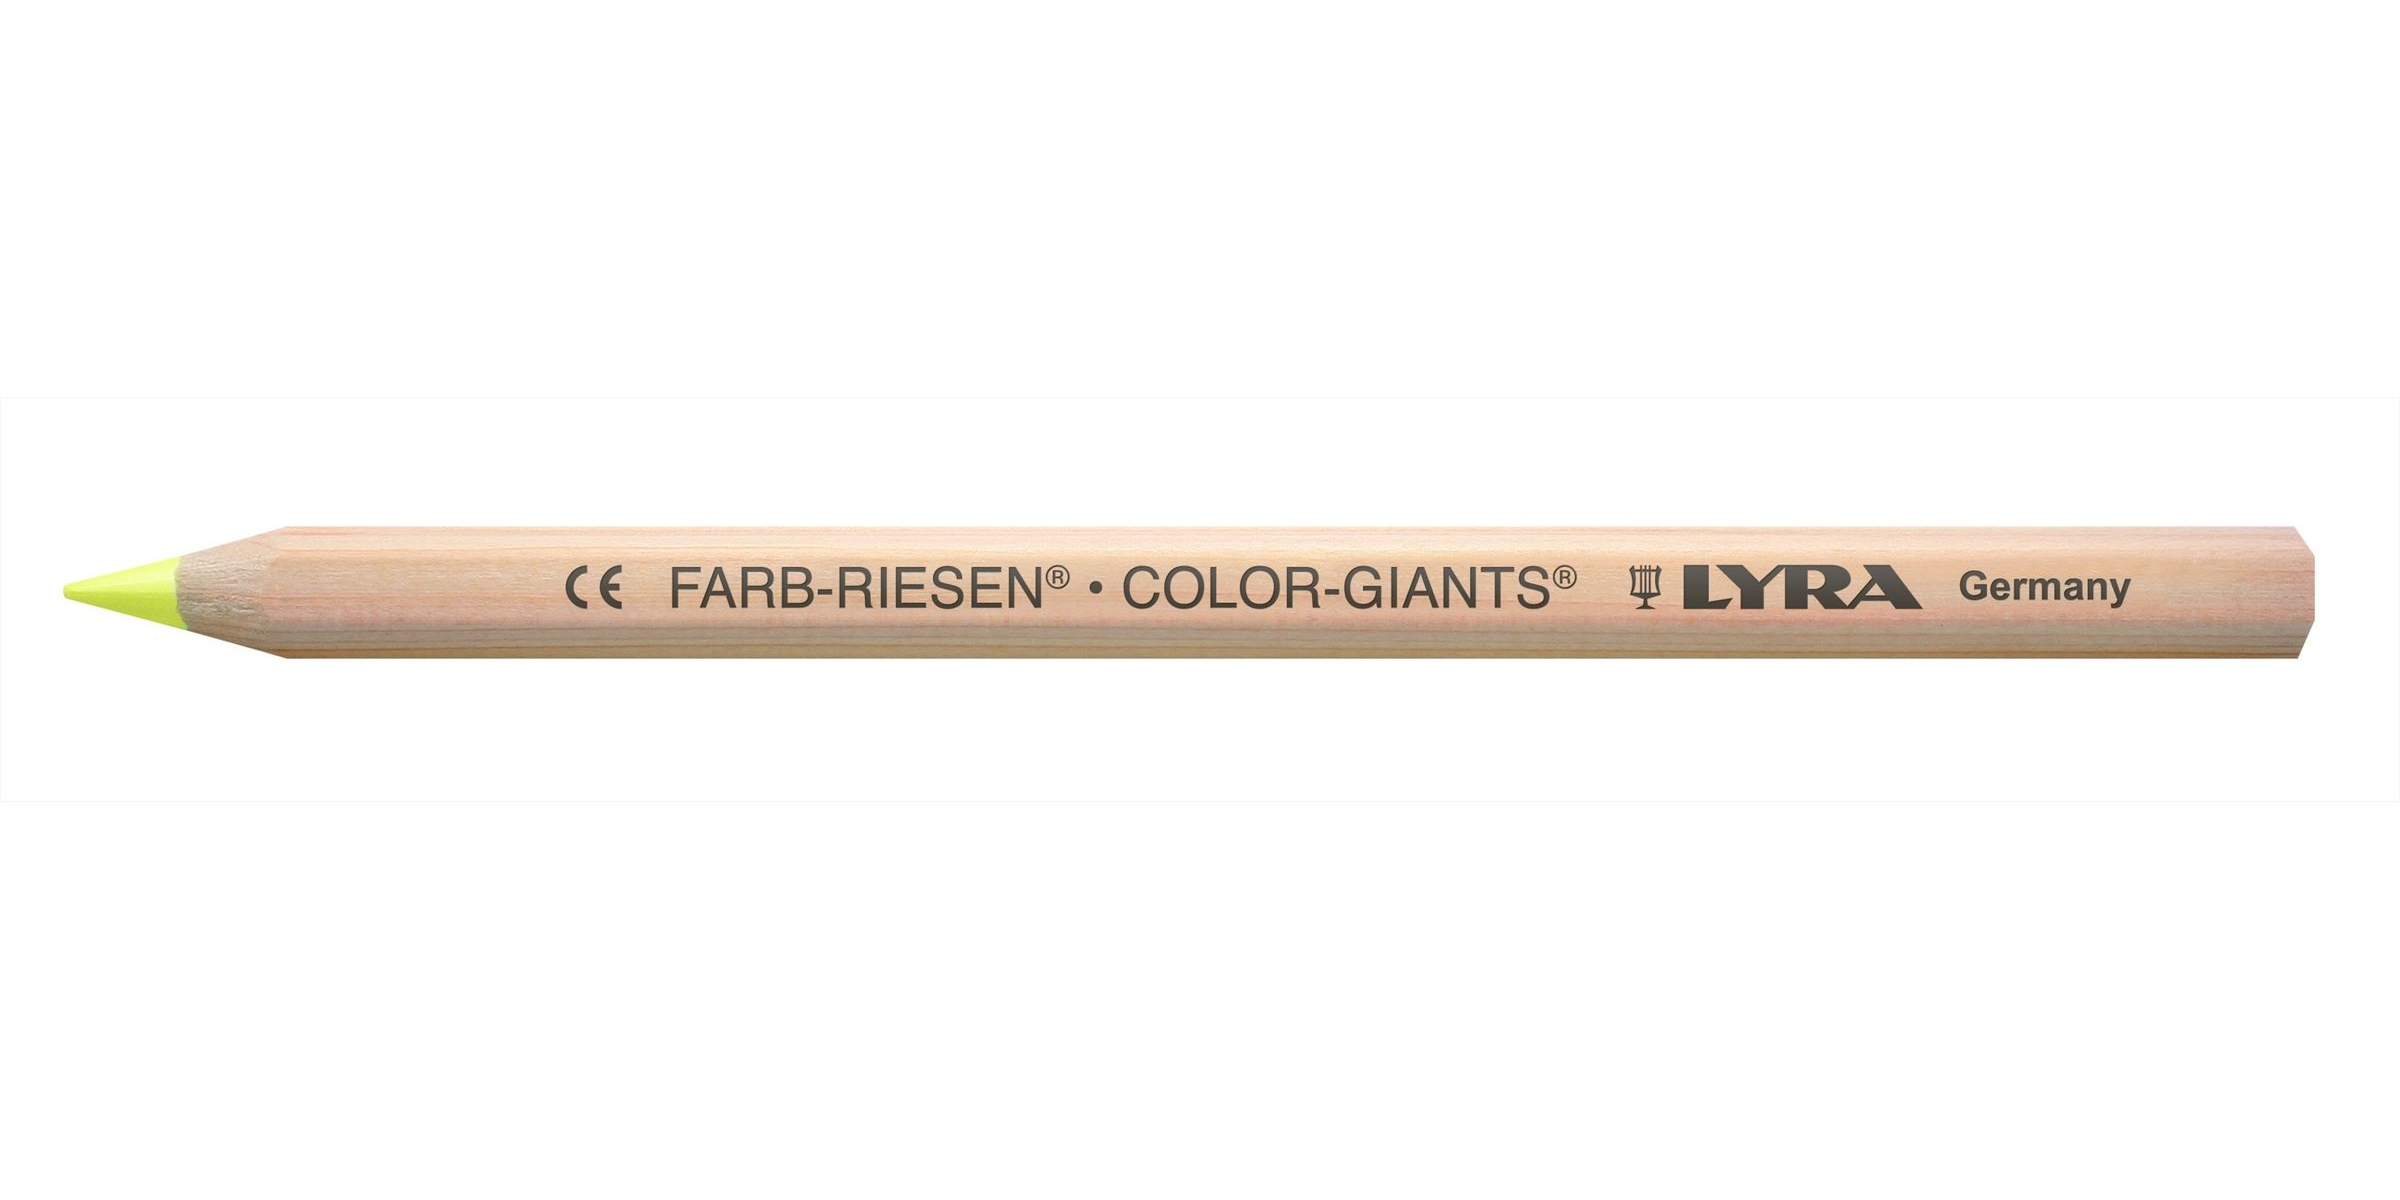 Crayon de couleurs Lyra Color Giants - jaune